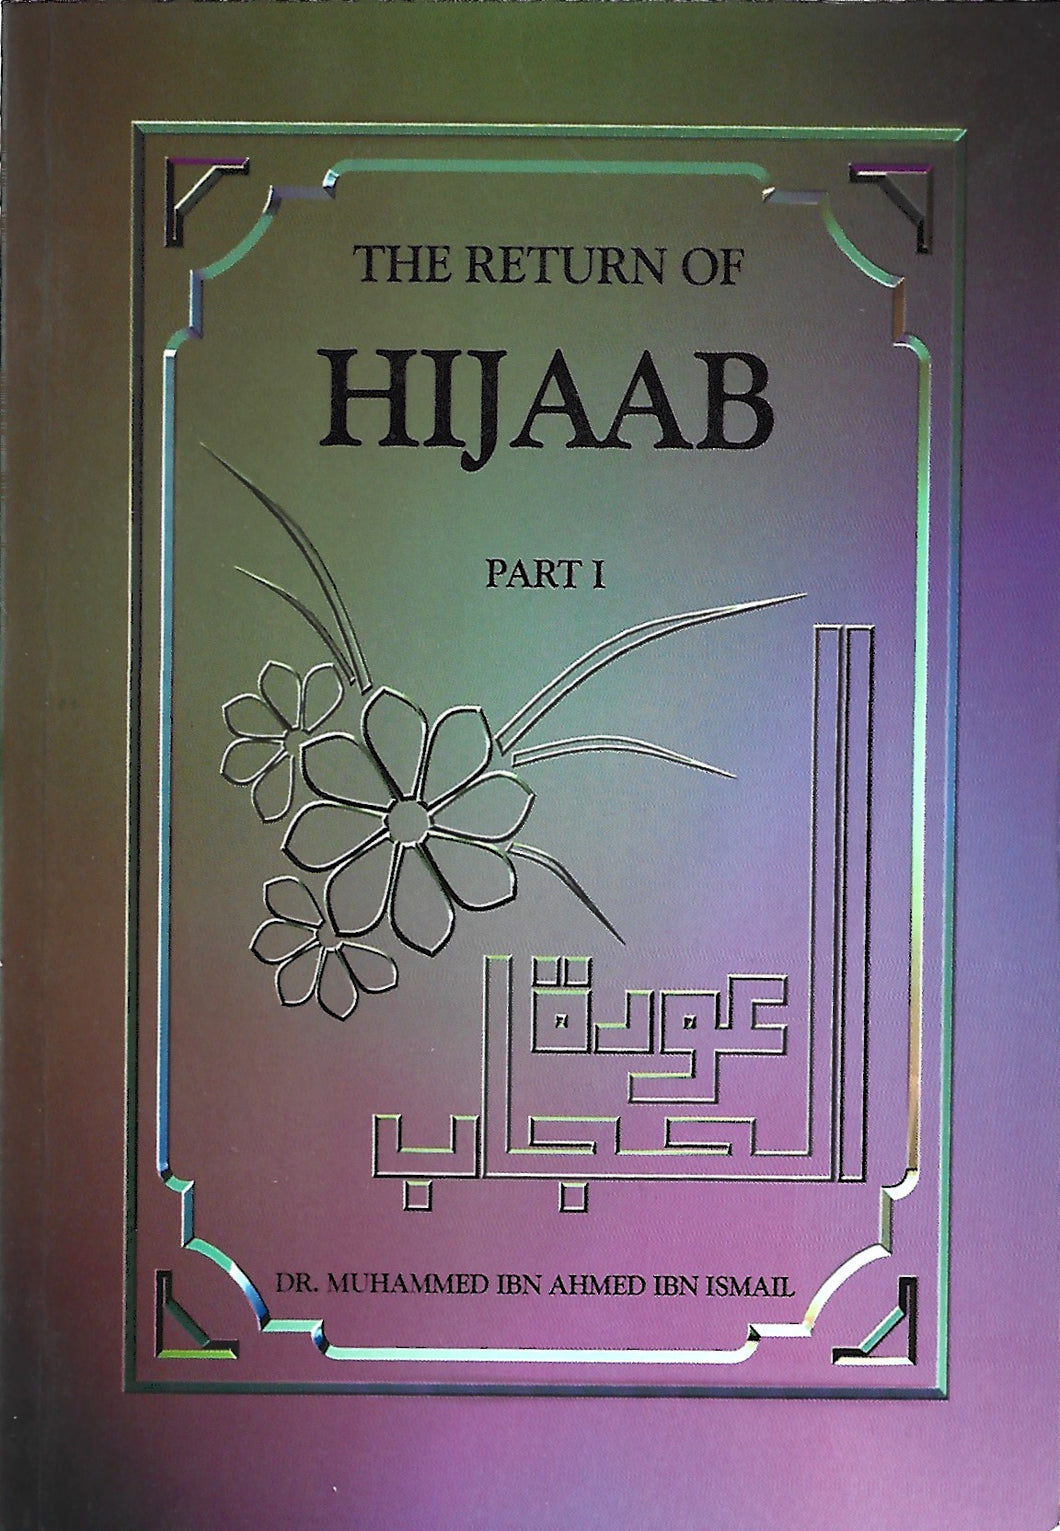 The Return of the Hijaab